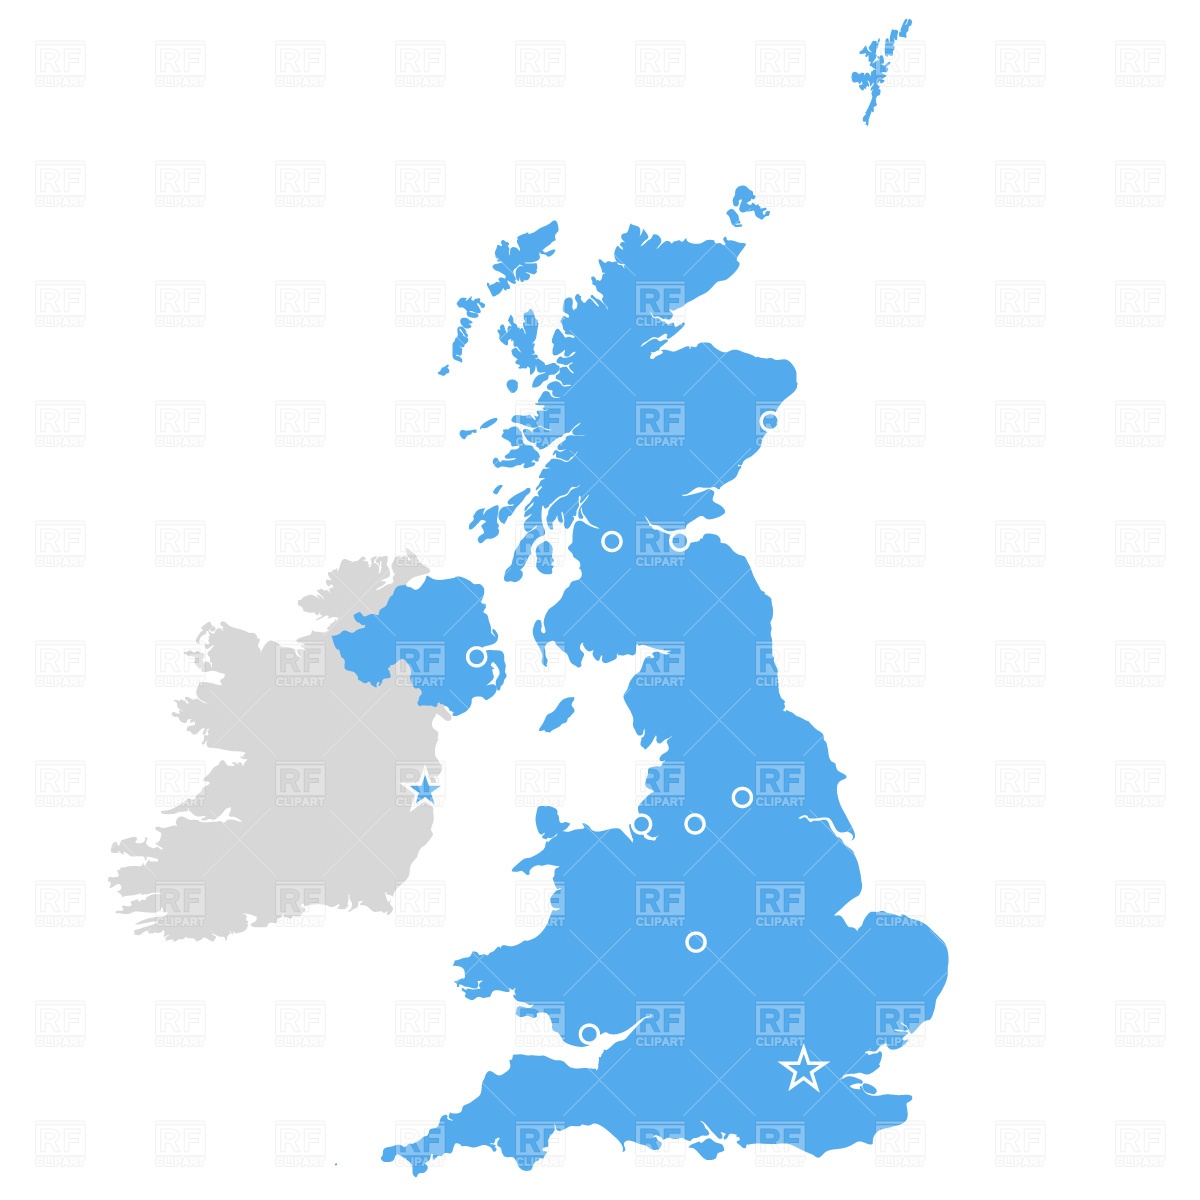 United Kingdom Republic Of Ireland Map Download Royalty Free Vector